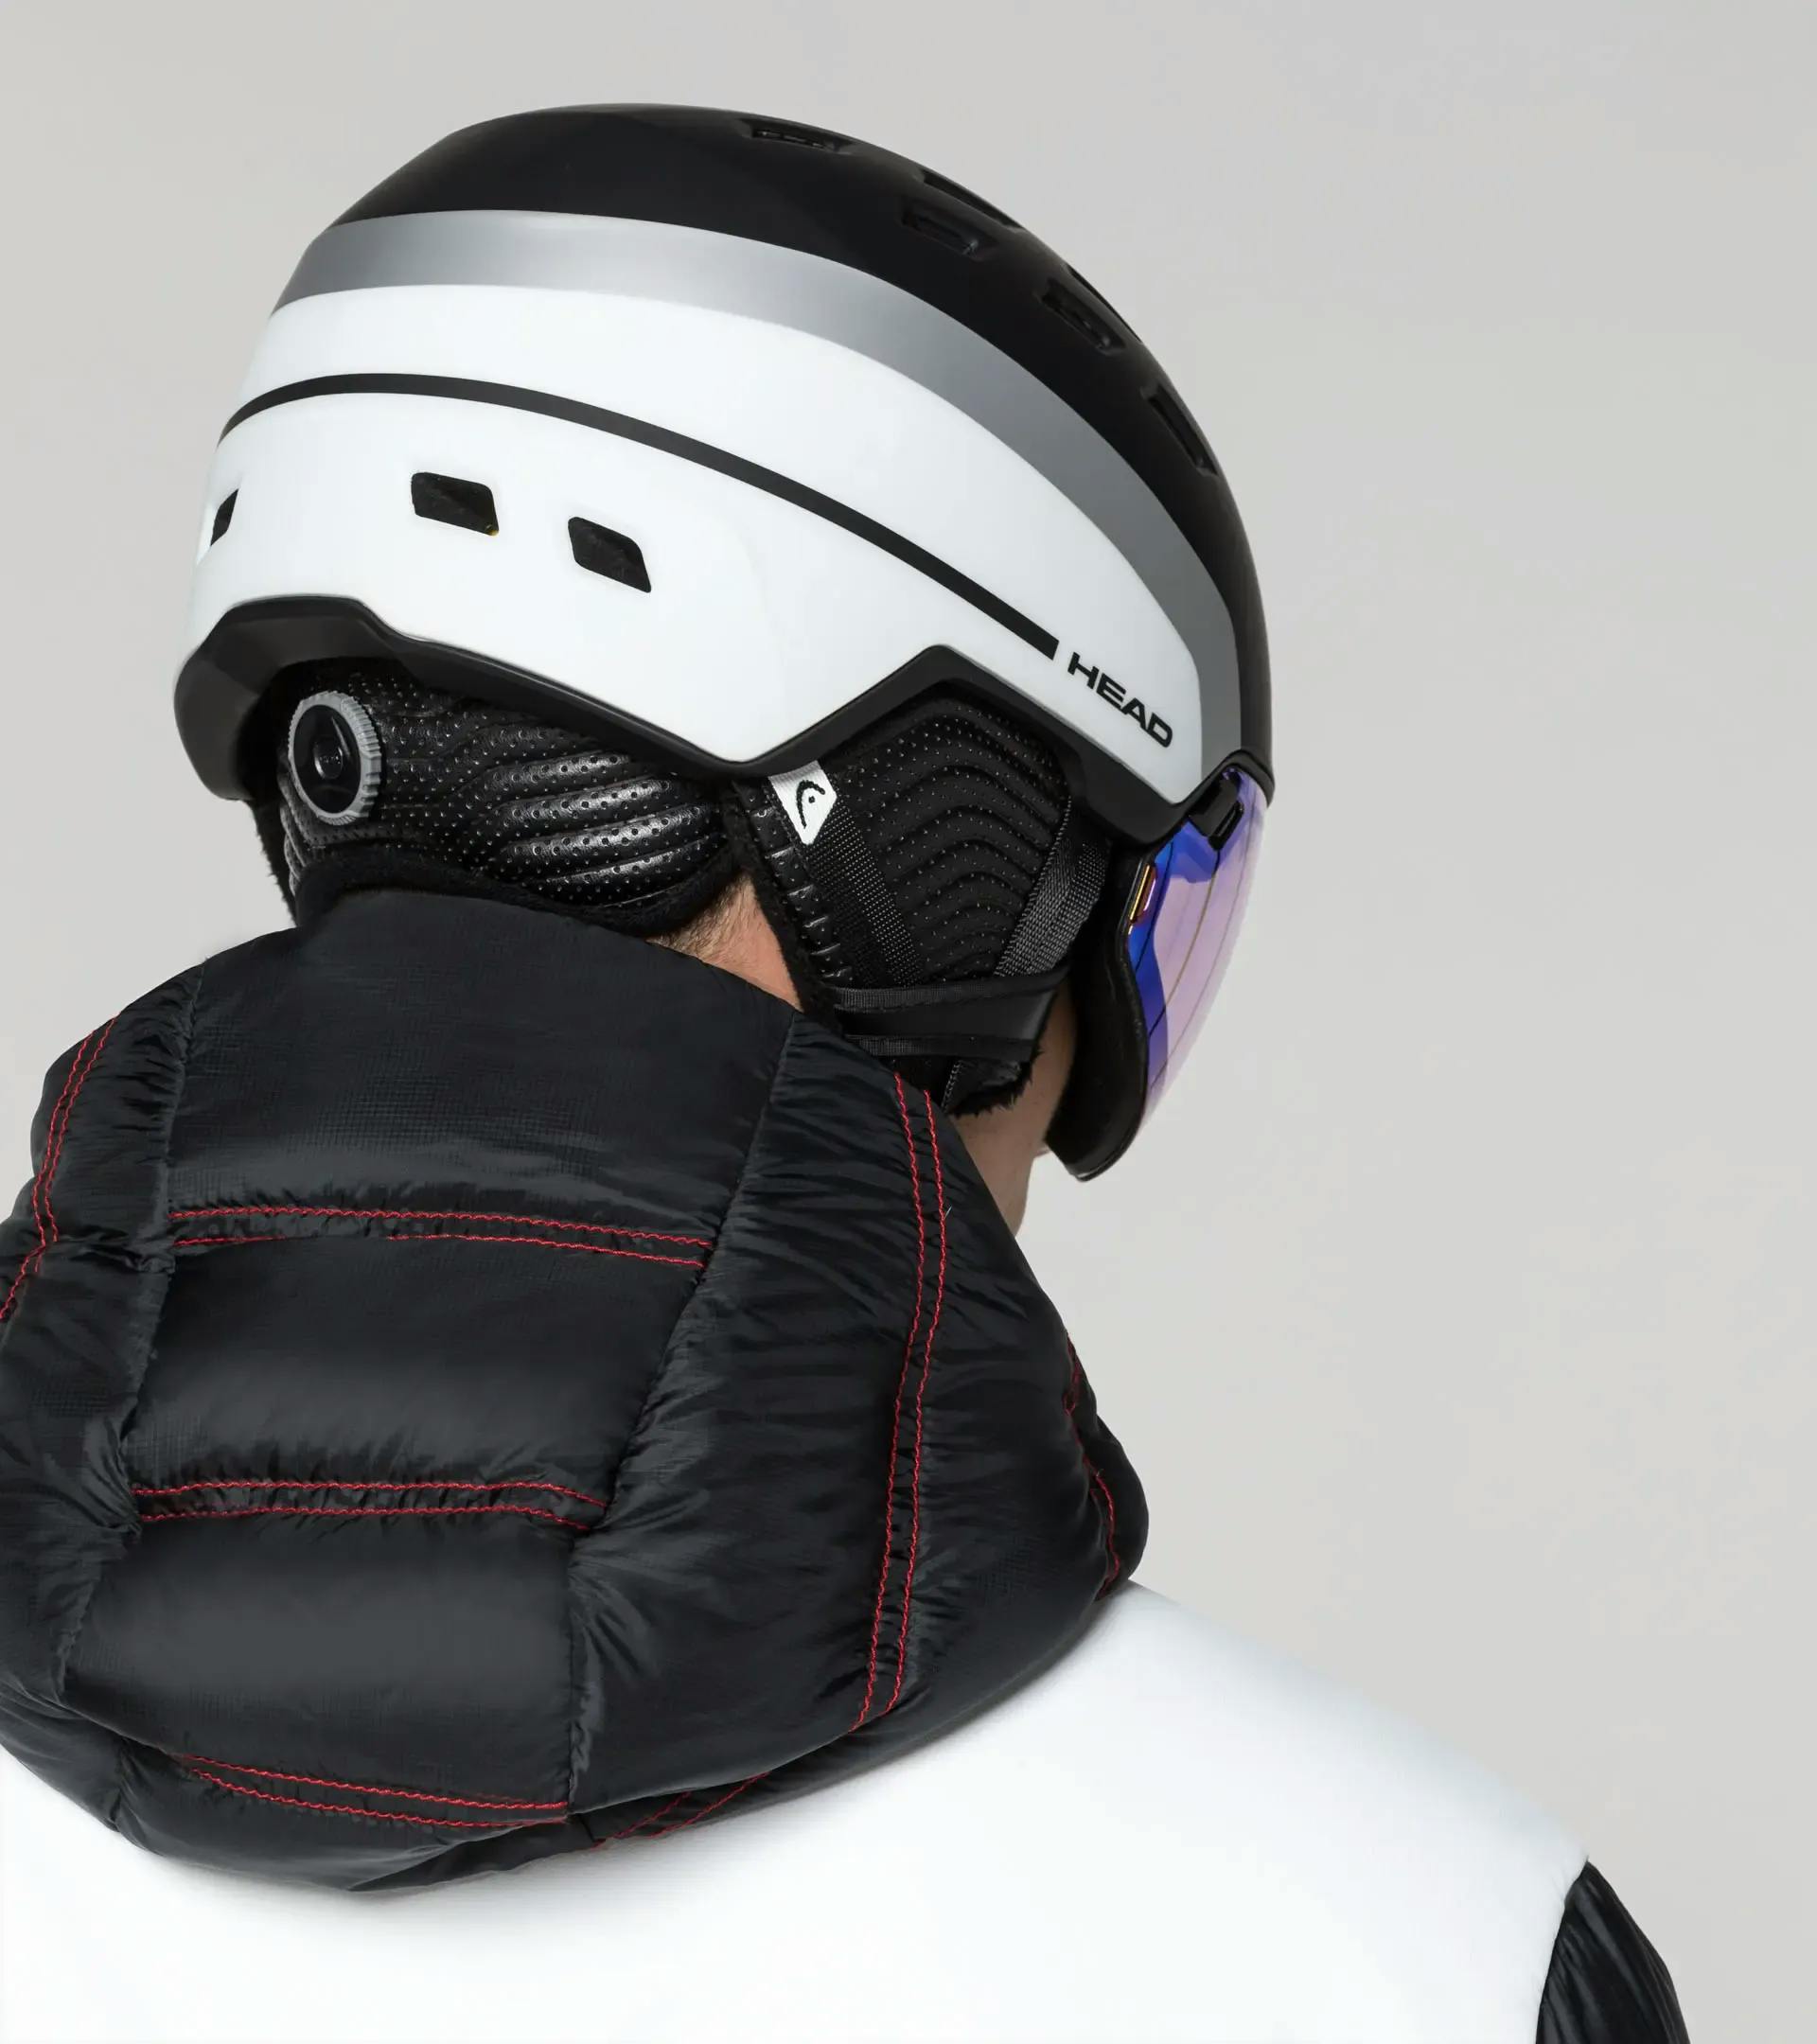 Head Radar Ski Helmet - Ski Helmets - Ski Helmets & Accessory